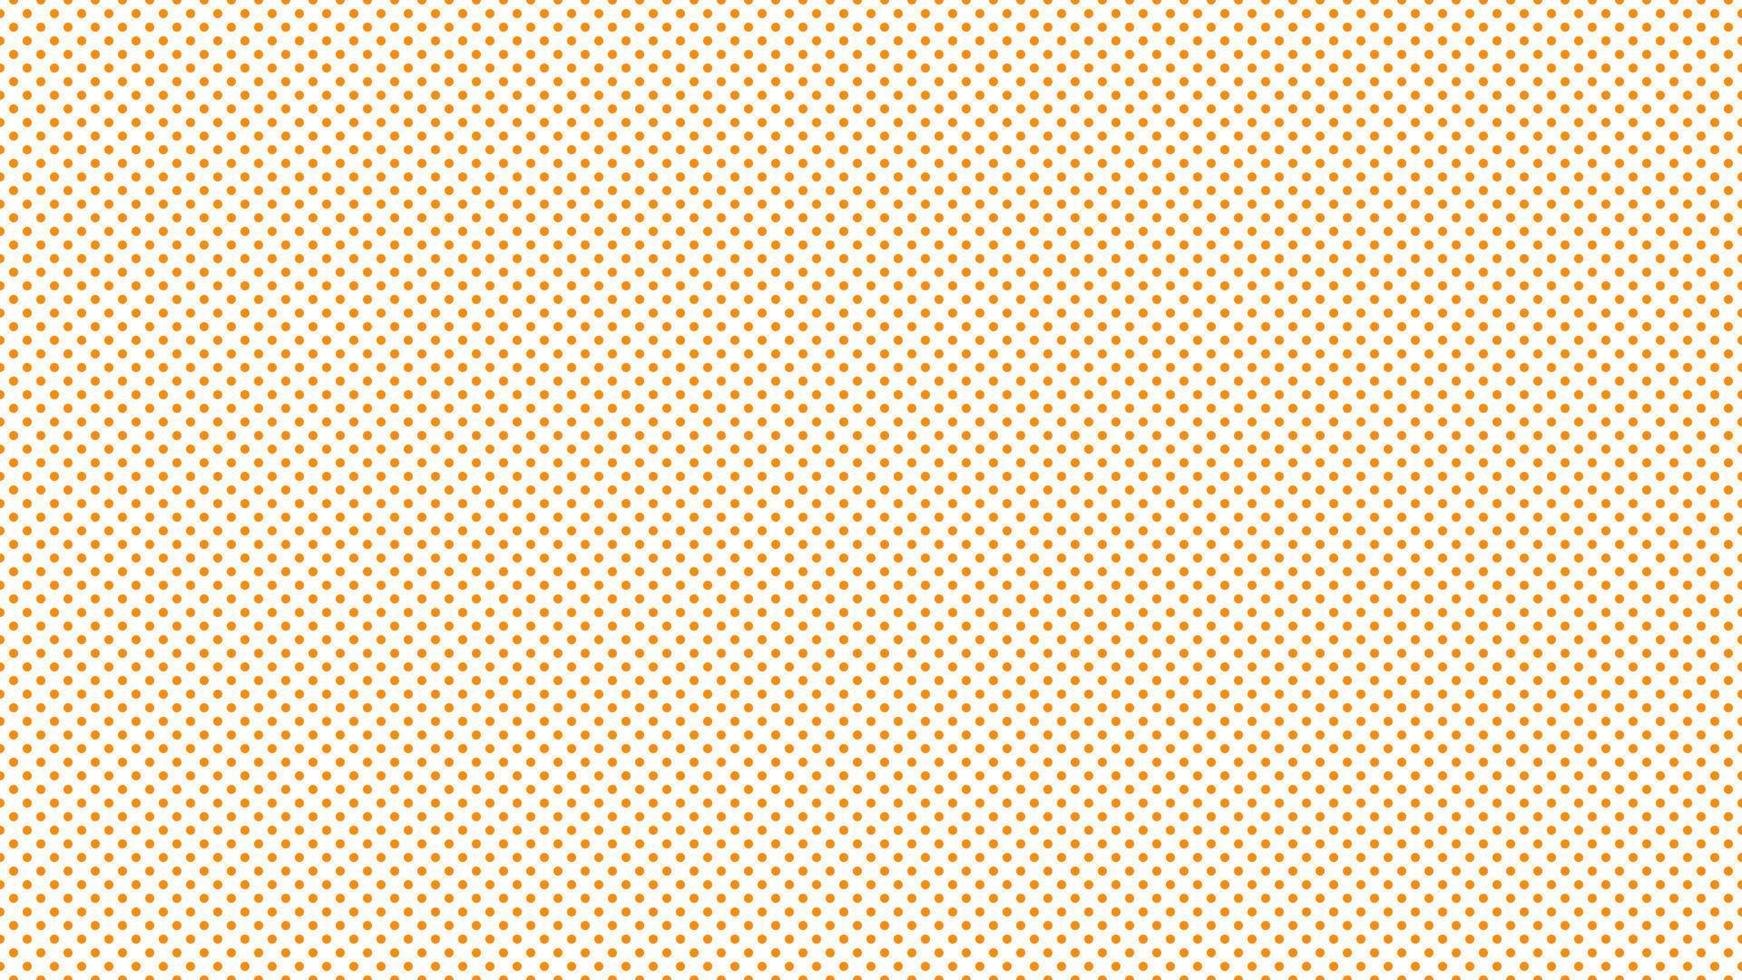 donker oranje kleur polka dots achtergrond vector